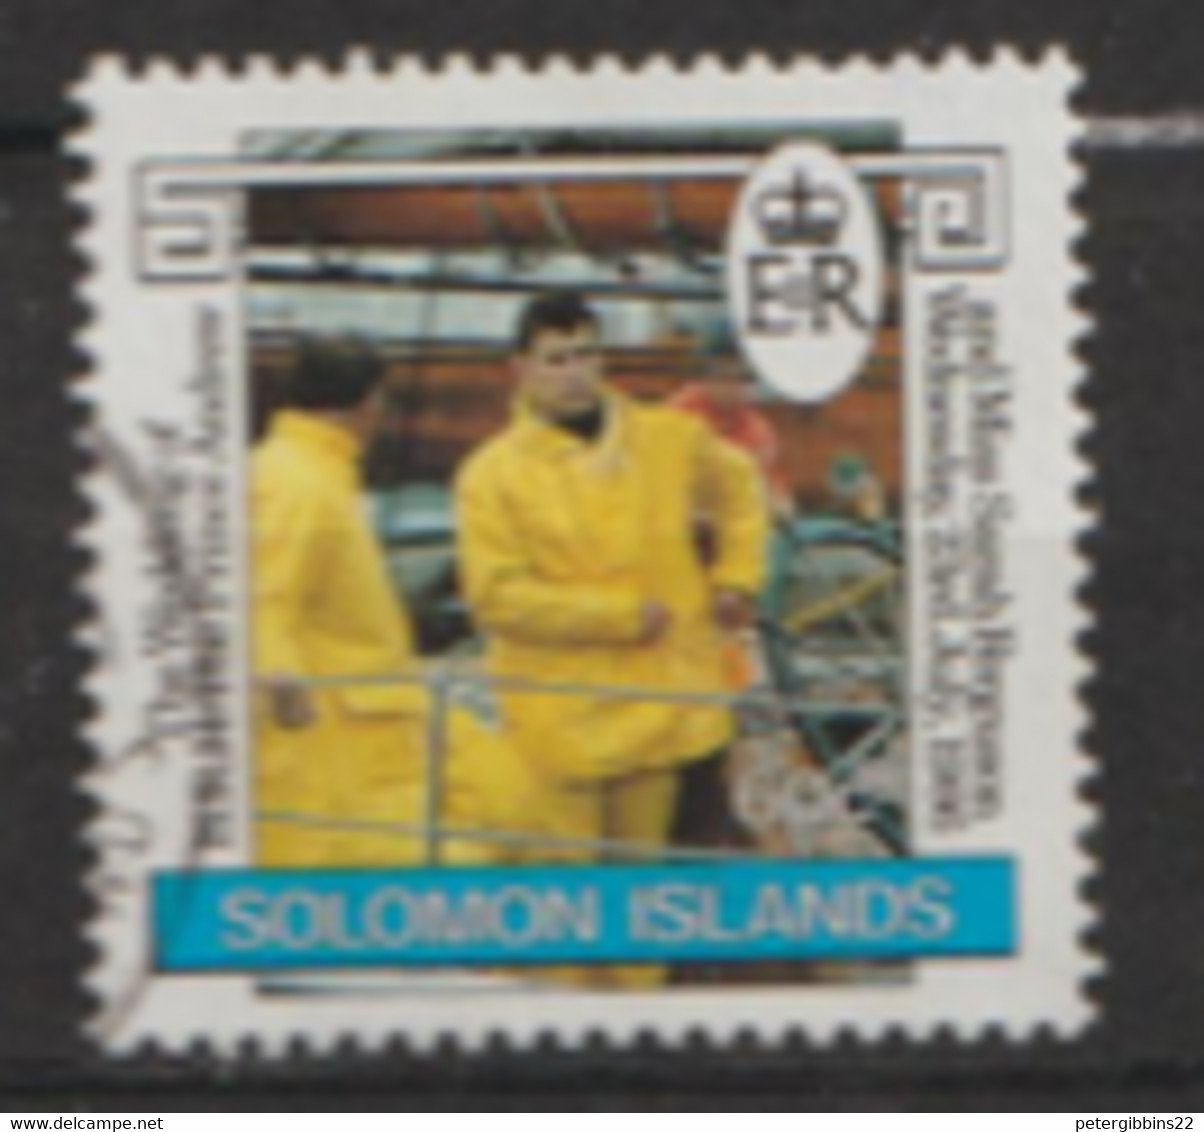 Solomon Islands  1986  SG 569  Royal Wedding   Fine Used - Solomon Islands